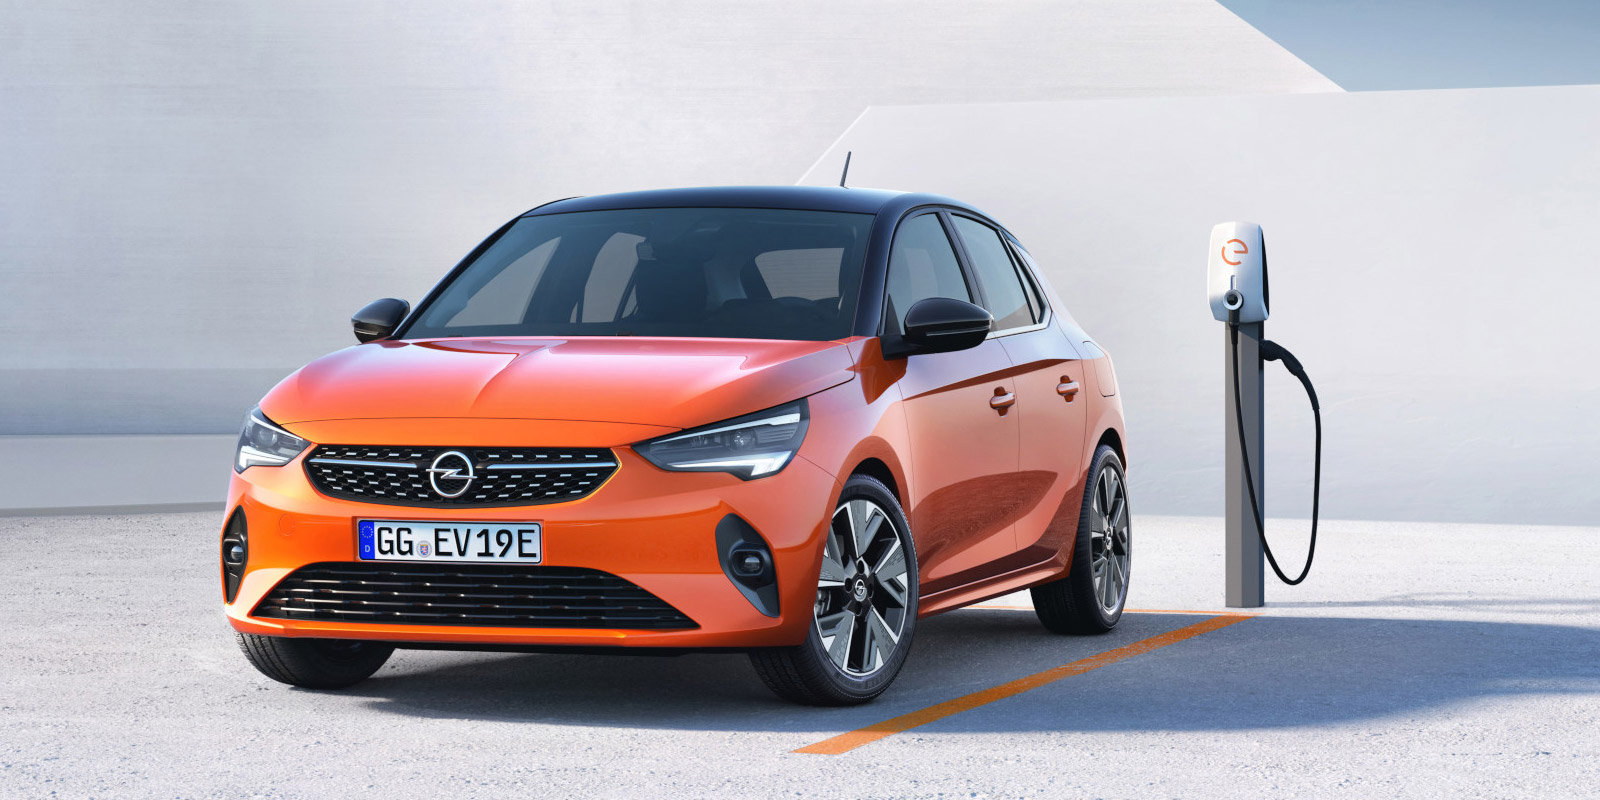 The Opel Coras-e would begin an EV blitz